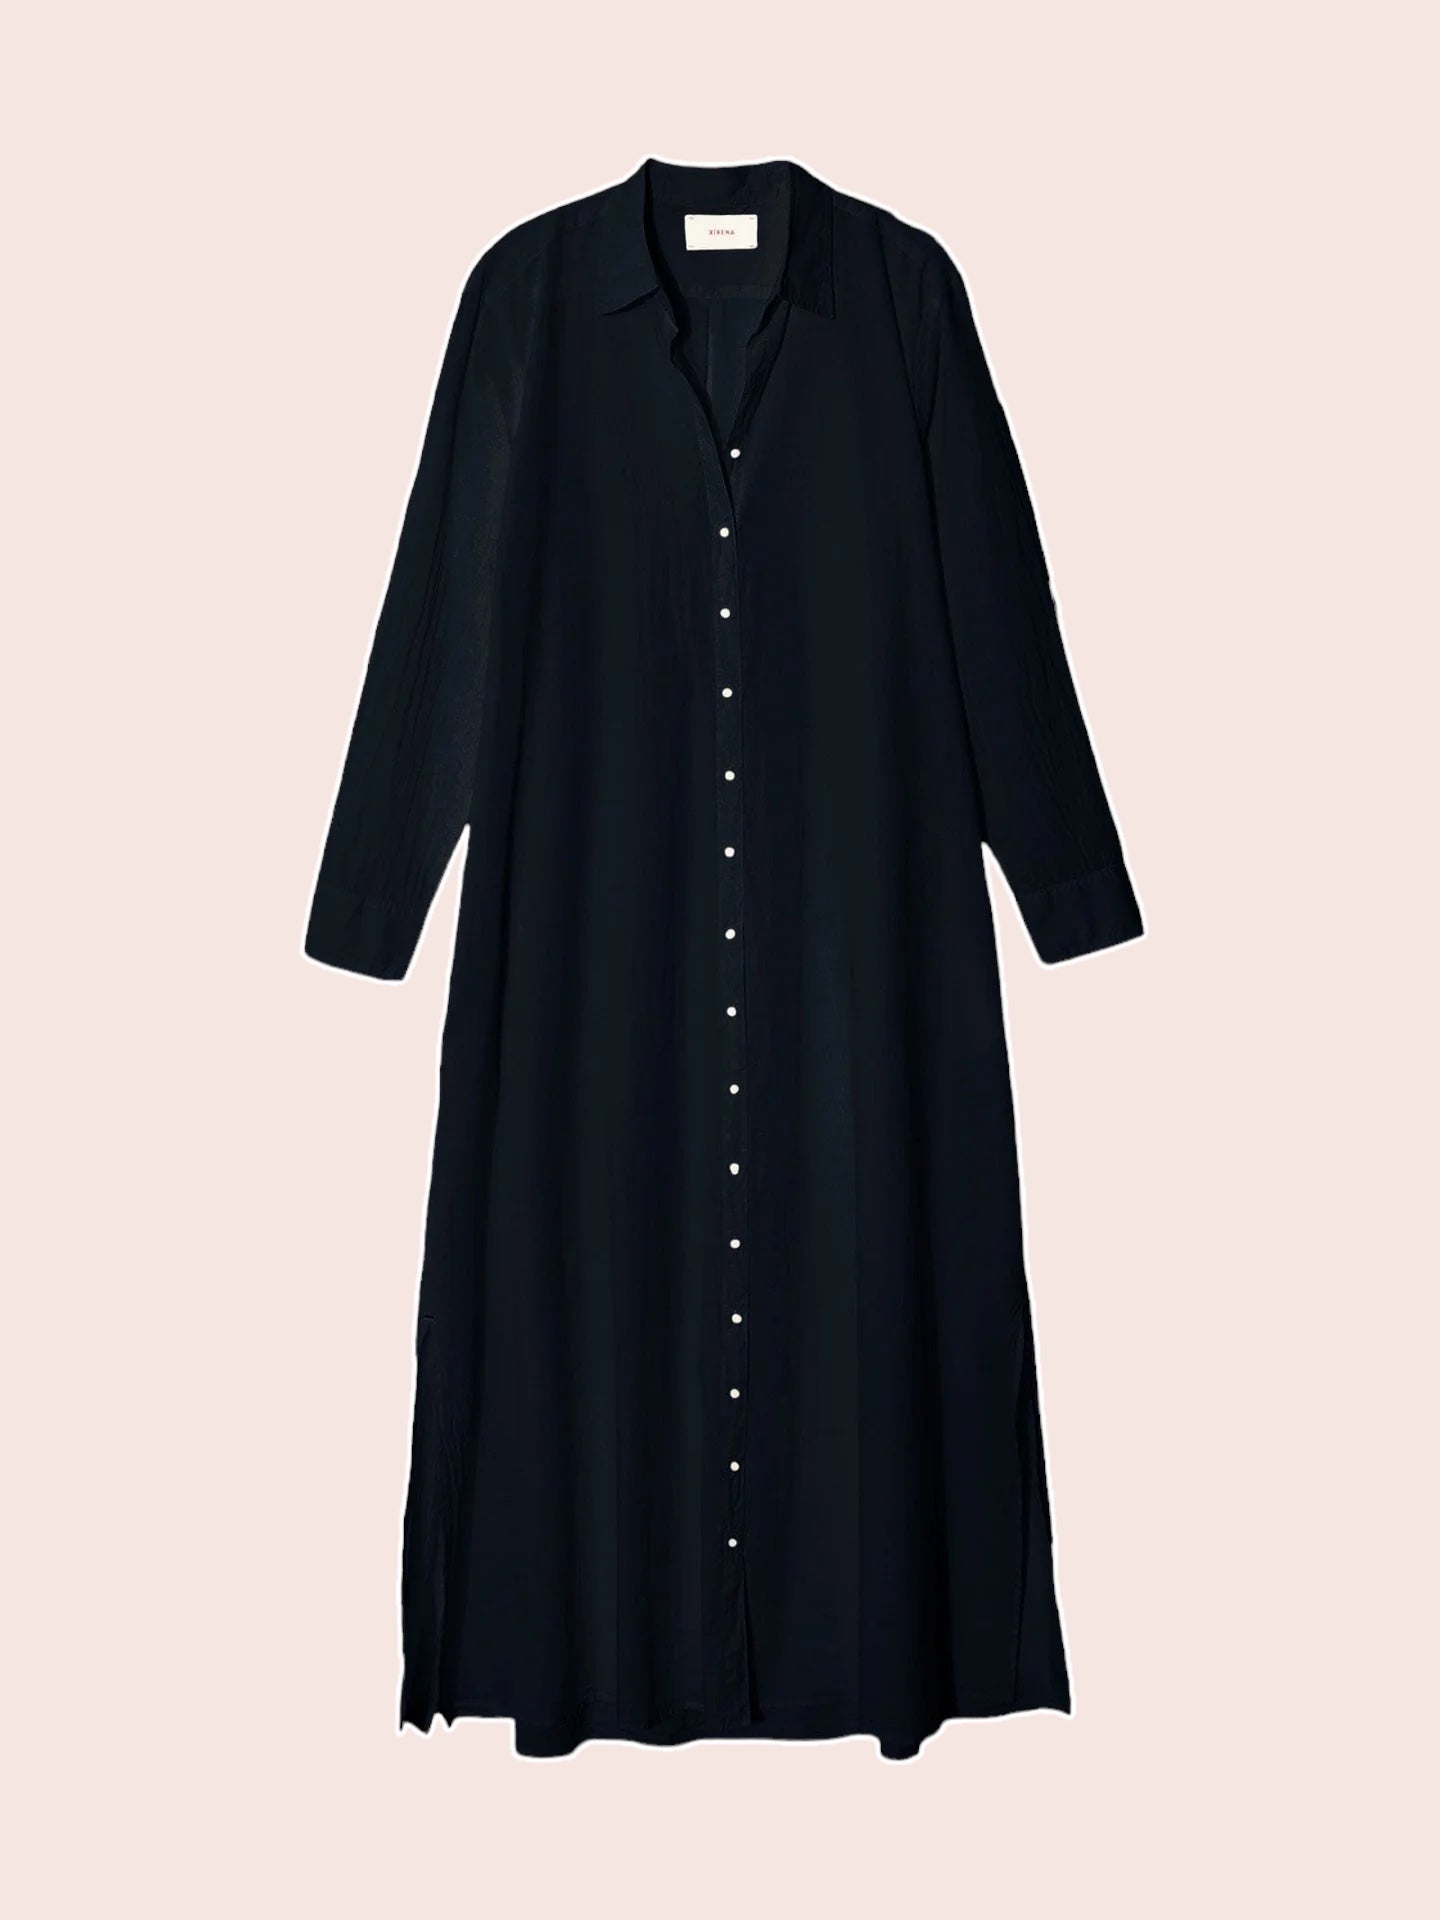 
                  
                    Xirena Boden Dress Black
                  
                